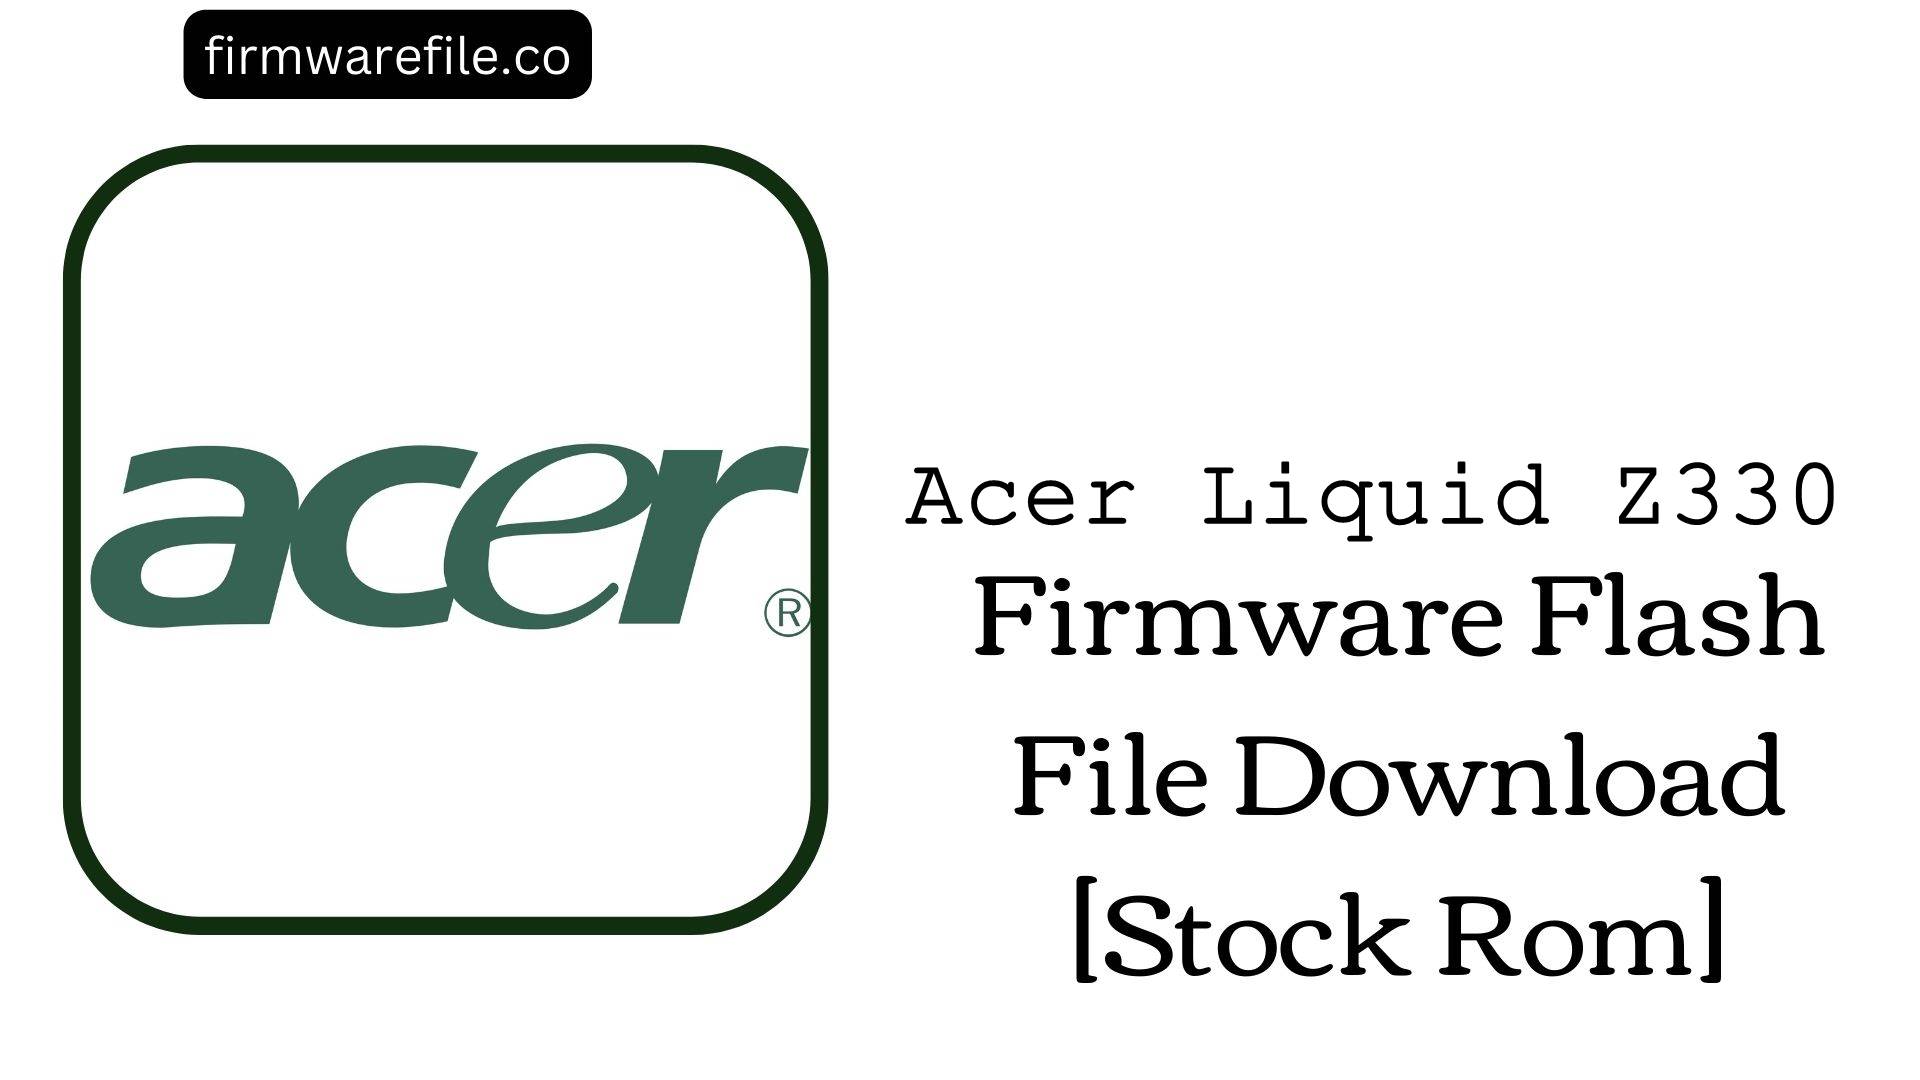 Acer Liquid Z330